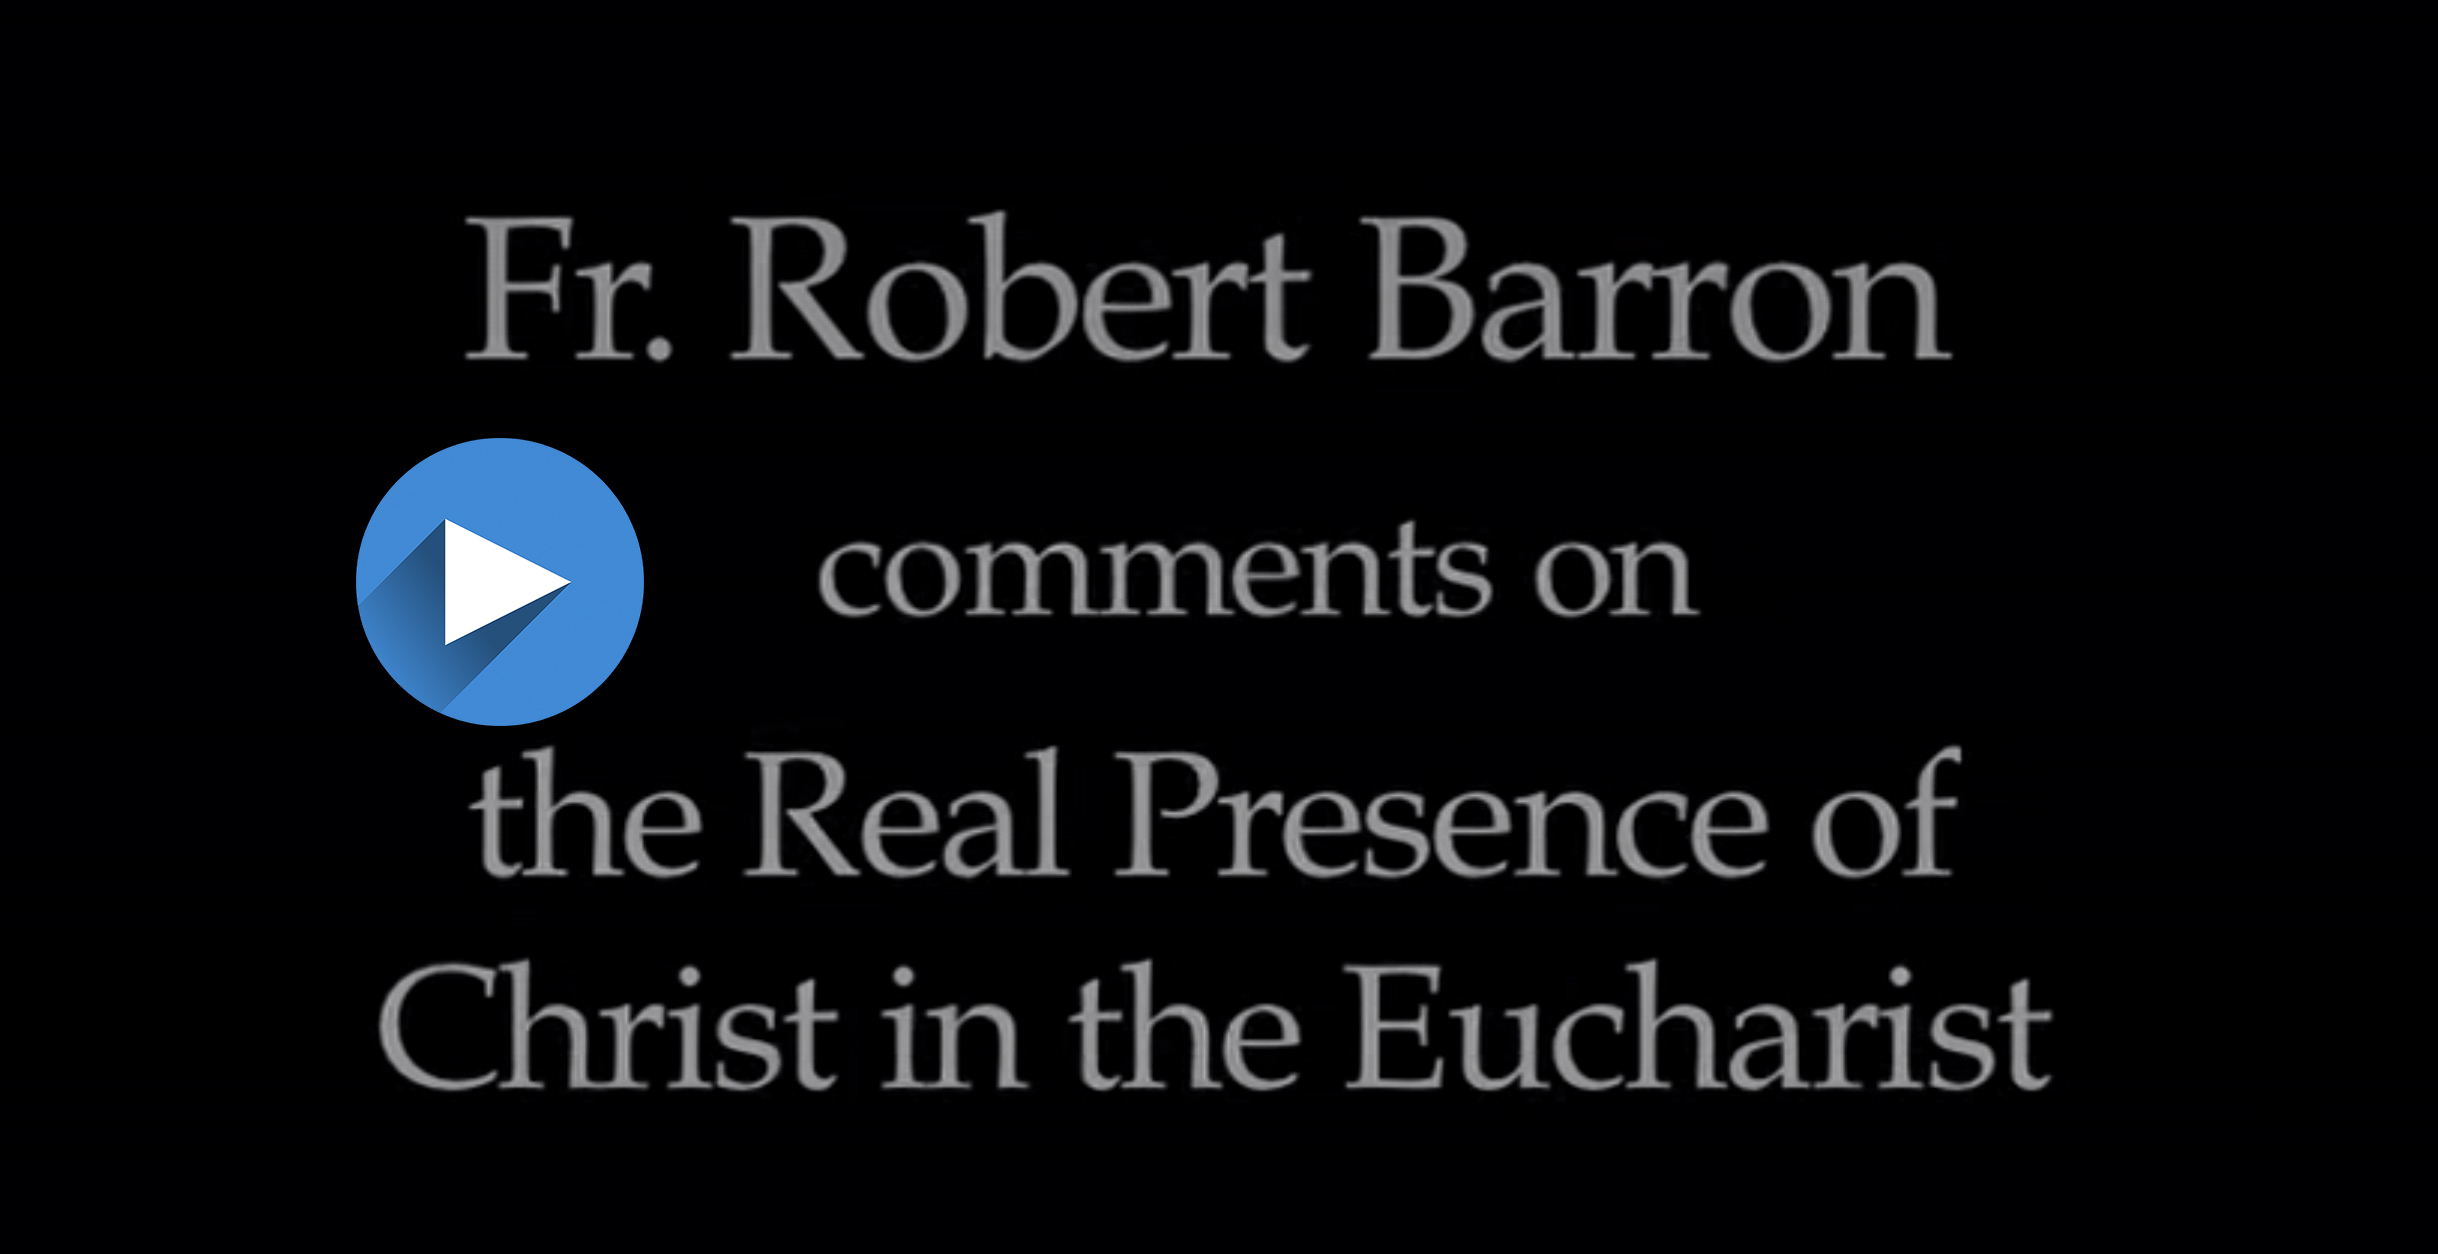 EUCHARIST VIDEO BARRON COVER with arrow.jpg